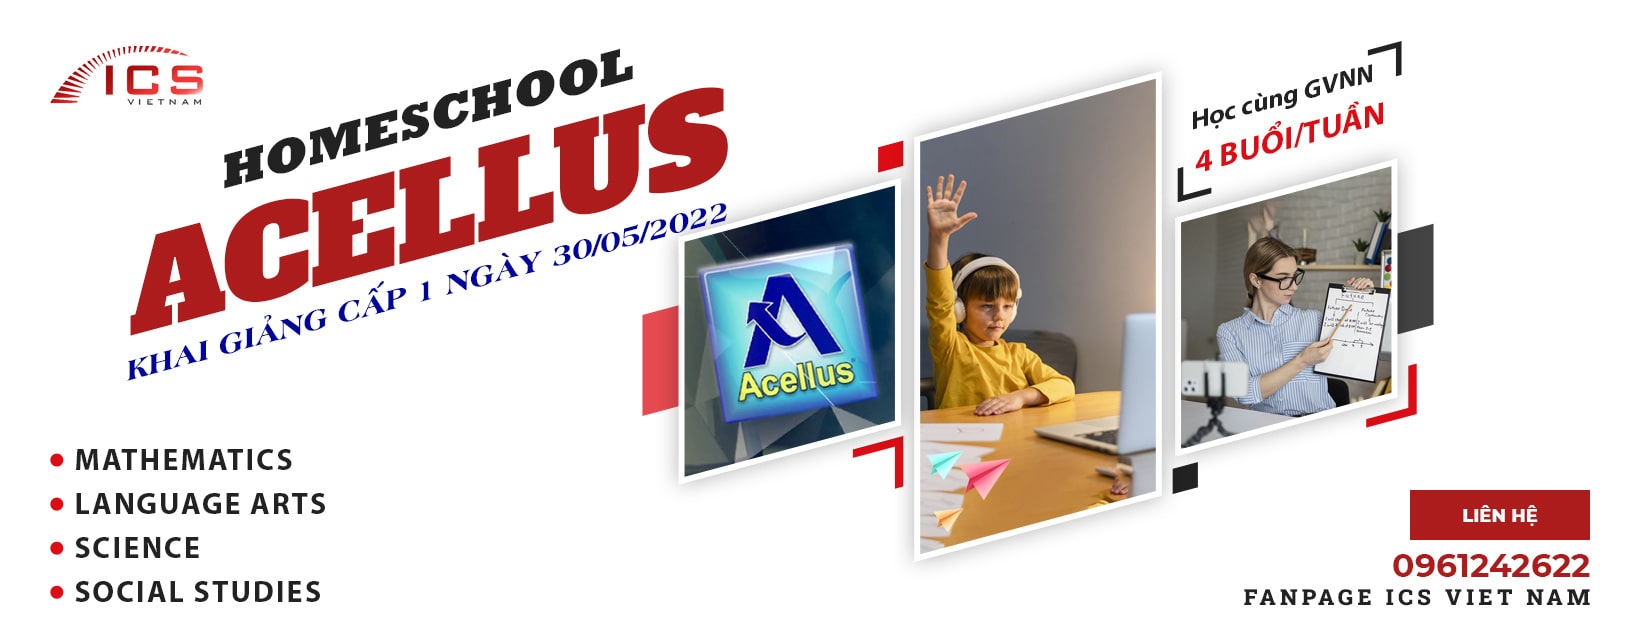 khai giảng lớp học homeschool Acellus 30-05-2022